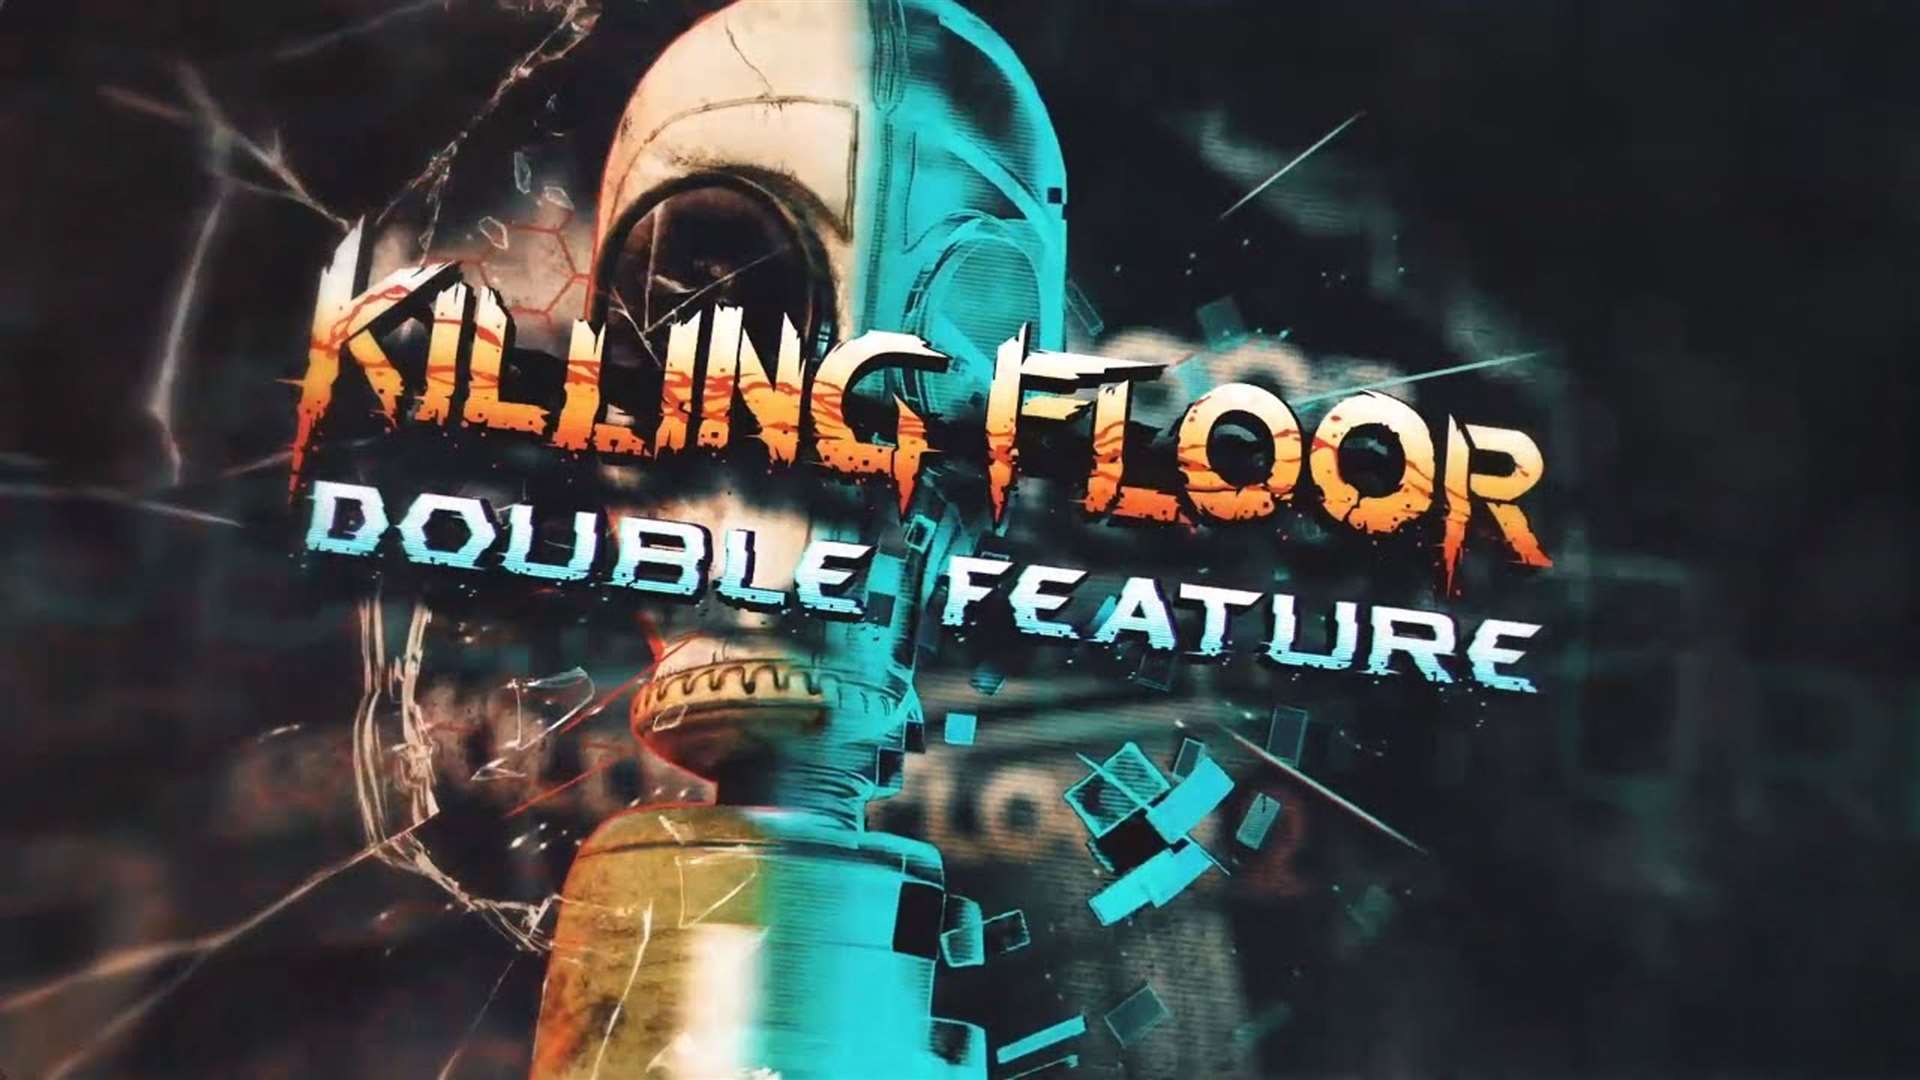 Killing Floor: Double Feature. Picture: Handout/PA